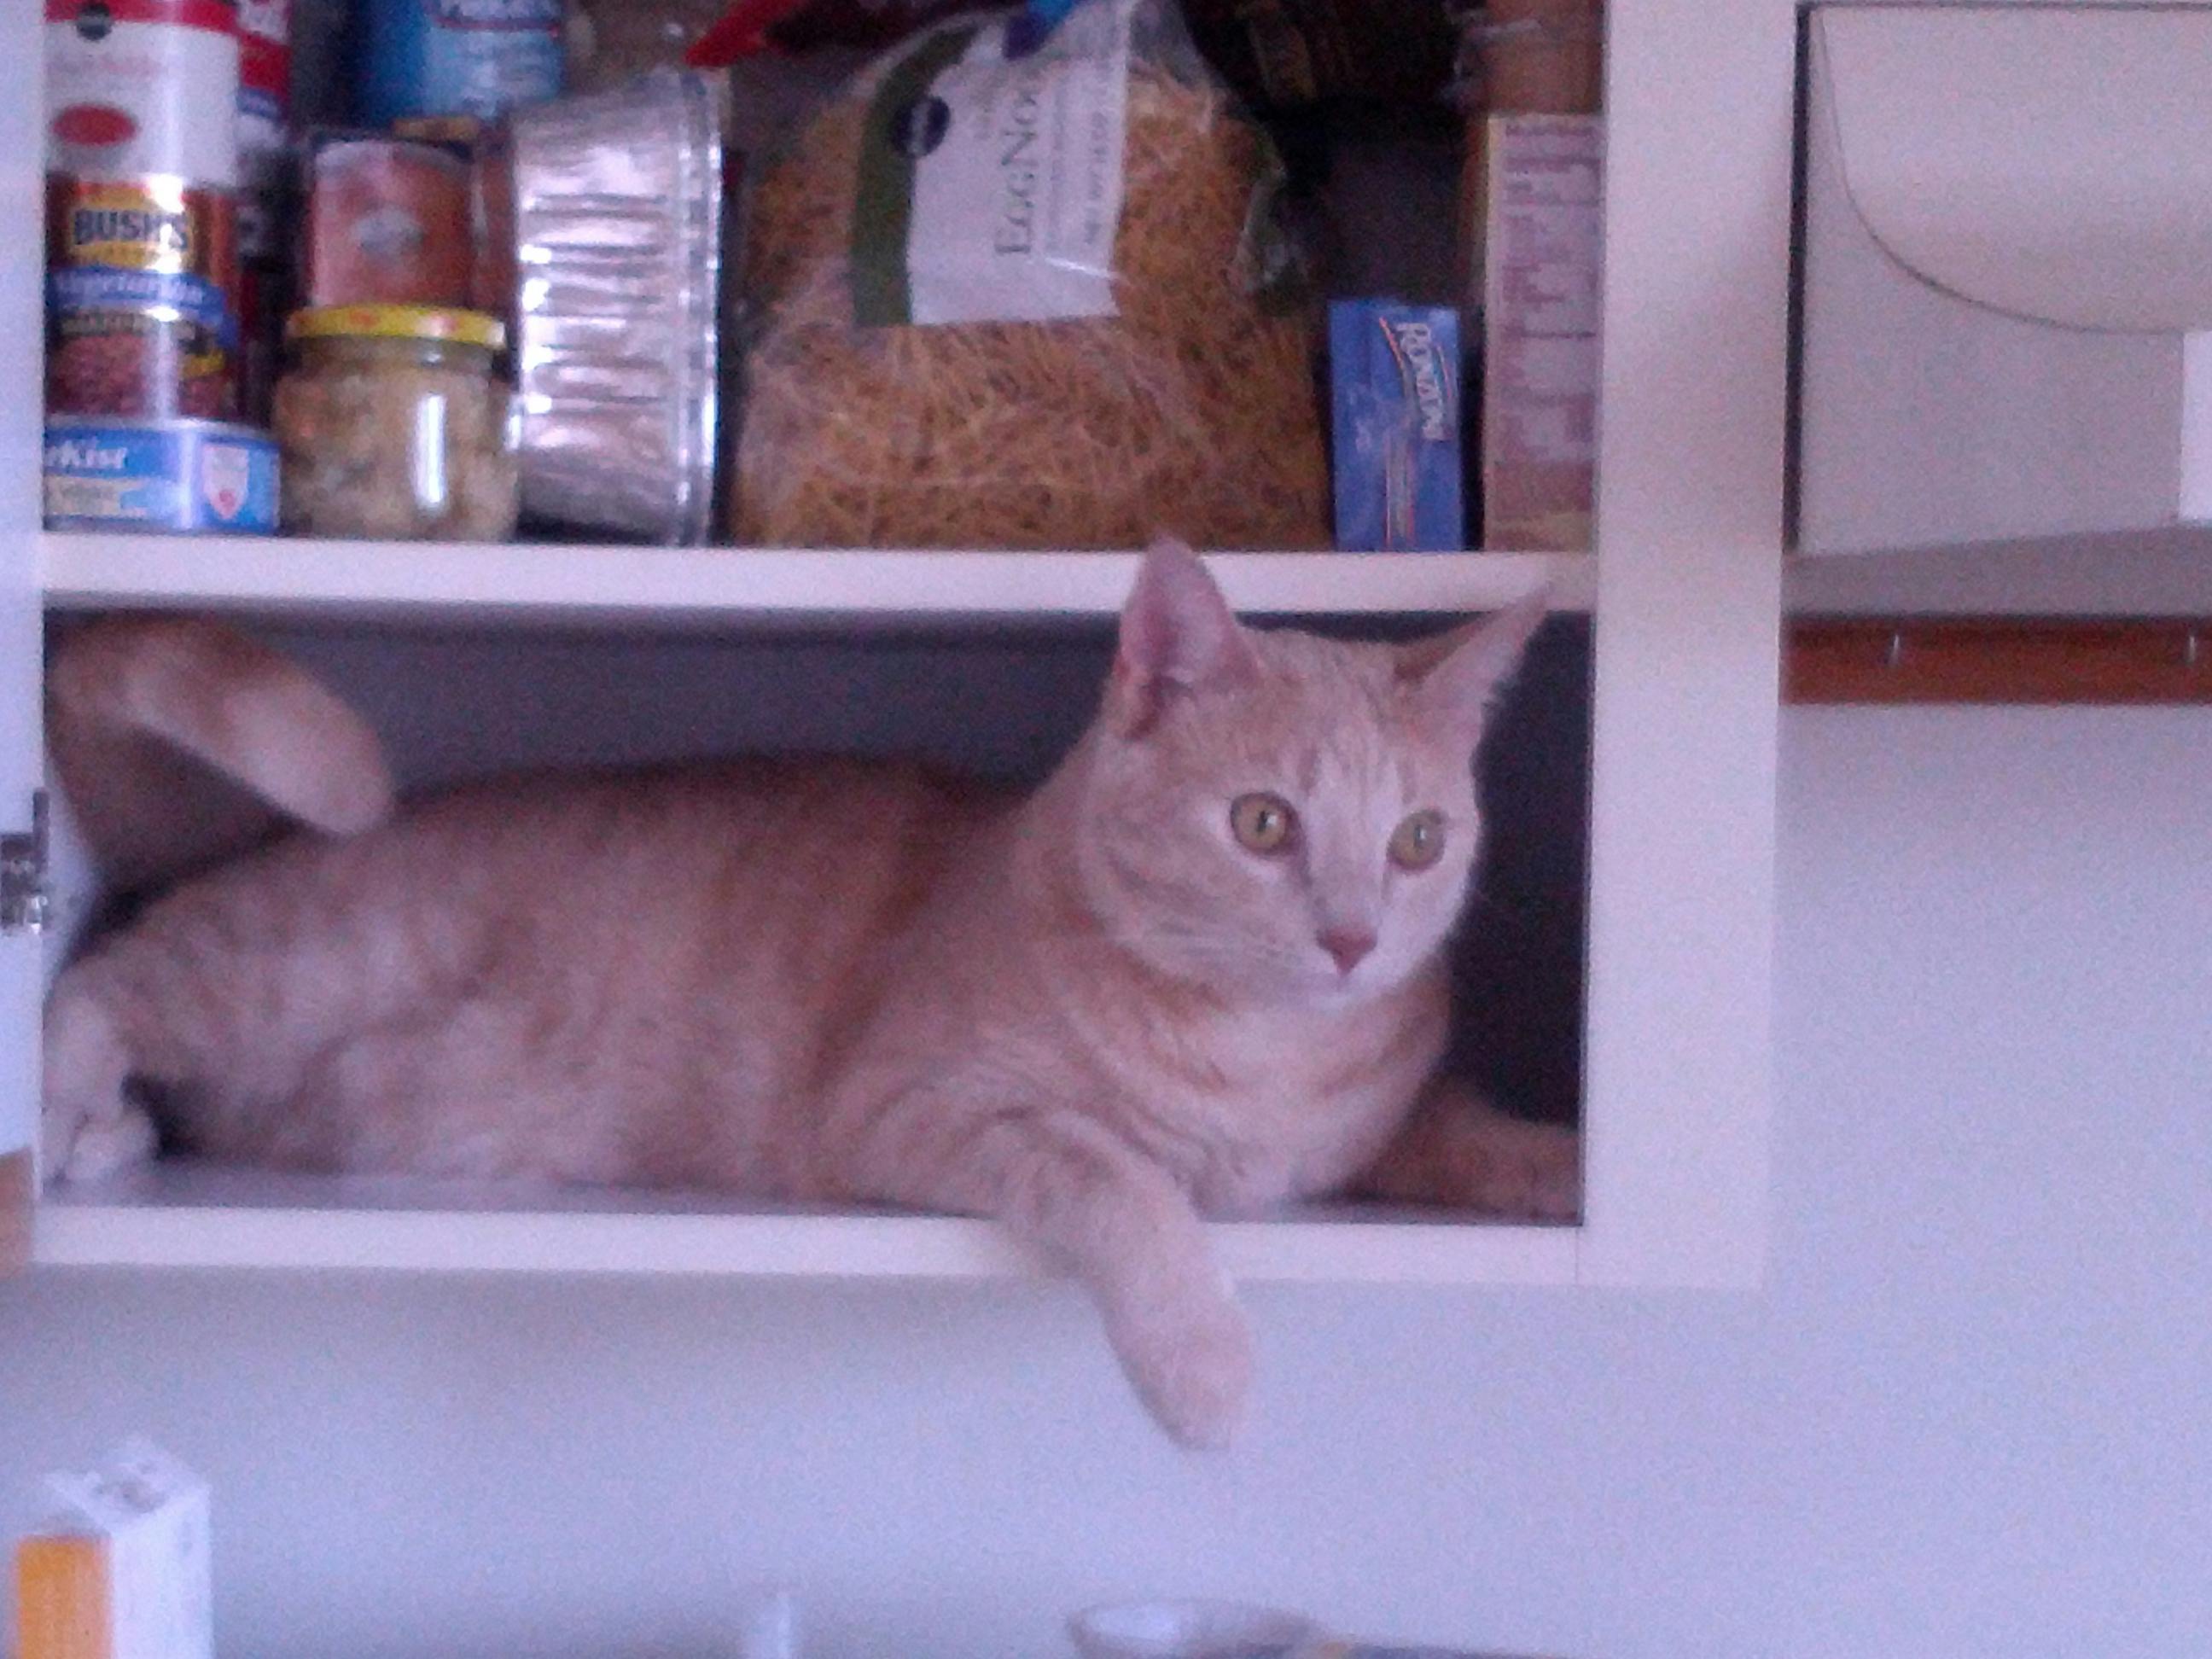 Free stock photo of cat shelf kitchen cupboard closet